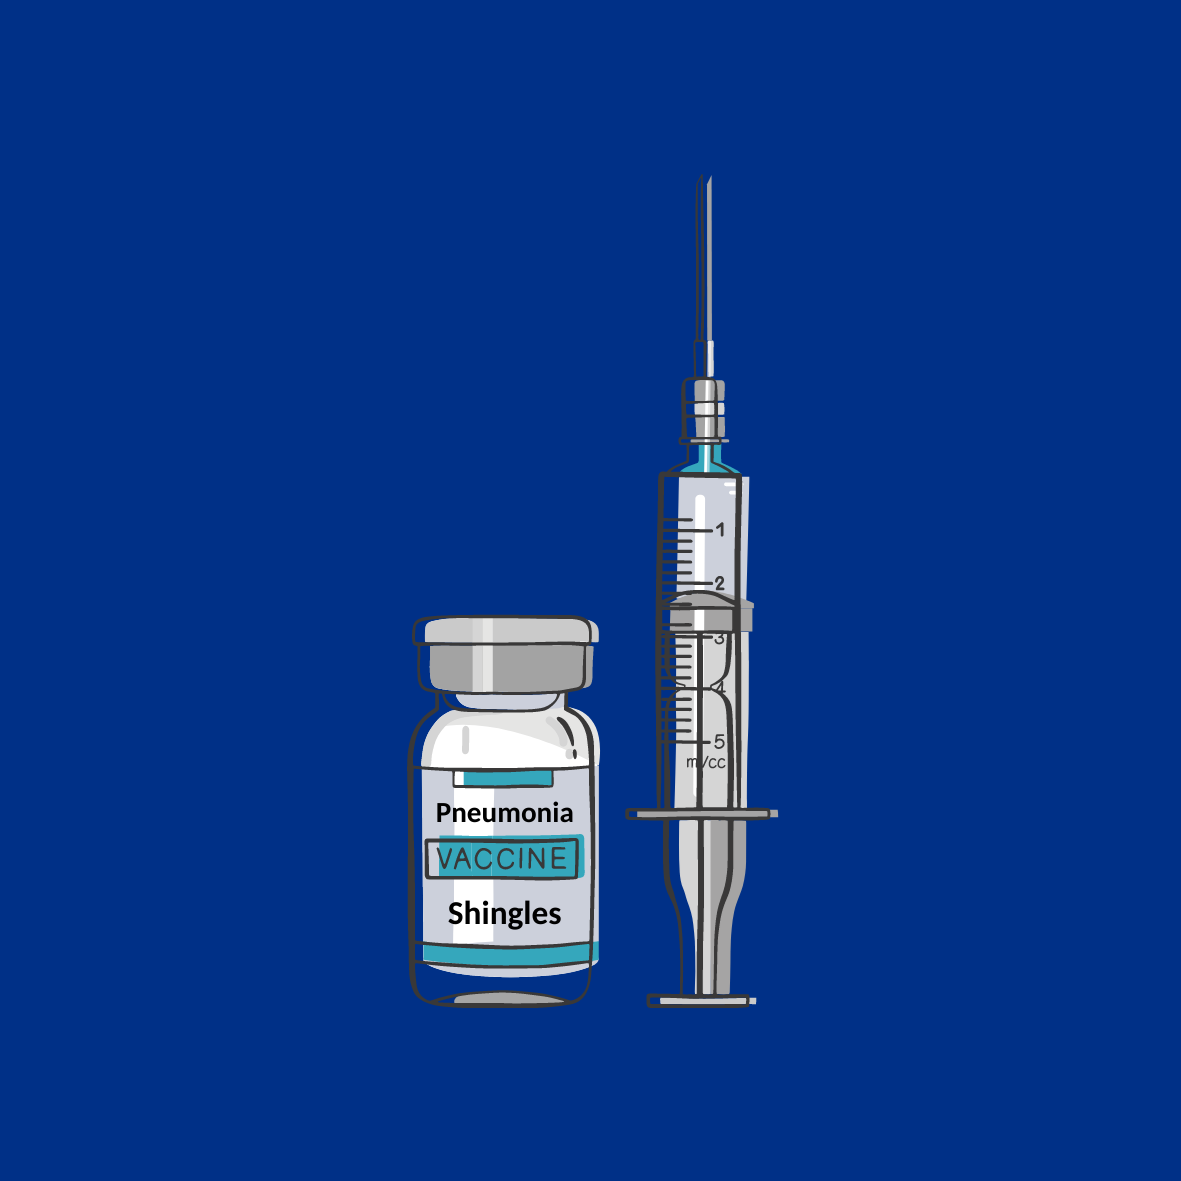 Image of Vaccine Bottle and Needle